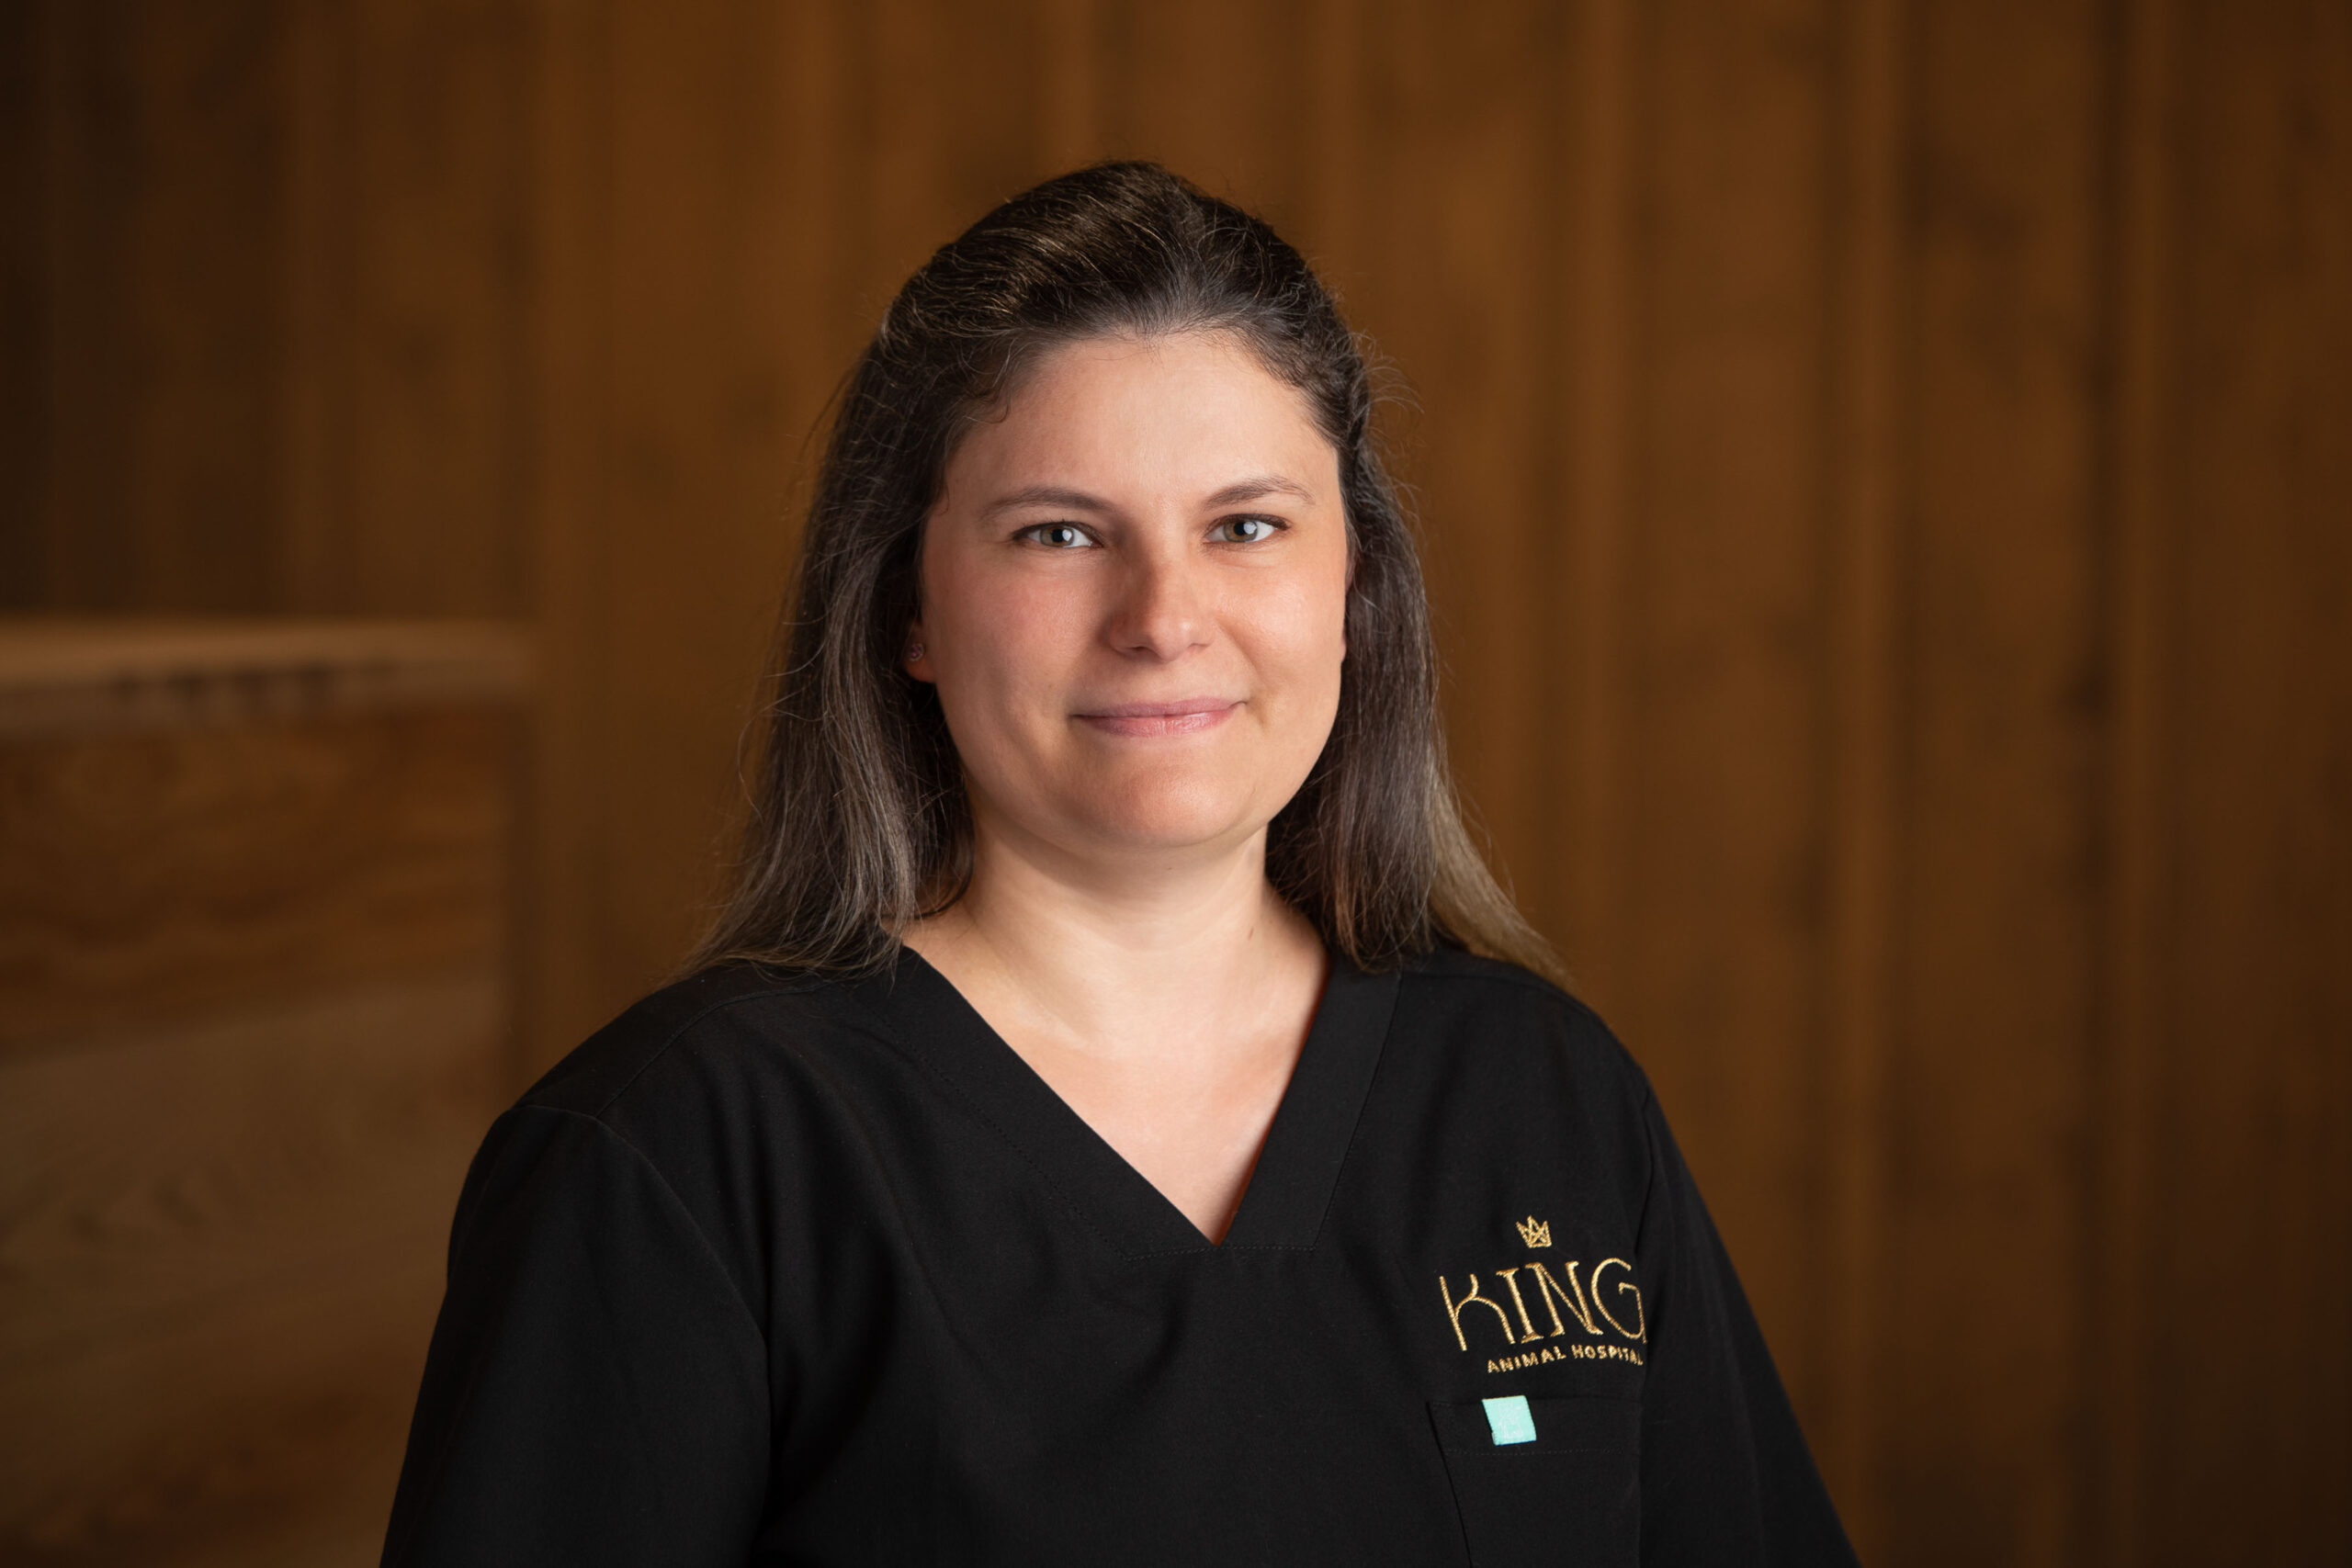 Dr. Fernanda Mantovani joins King Animal Hospital